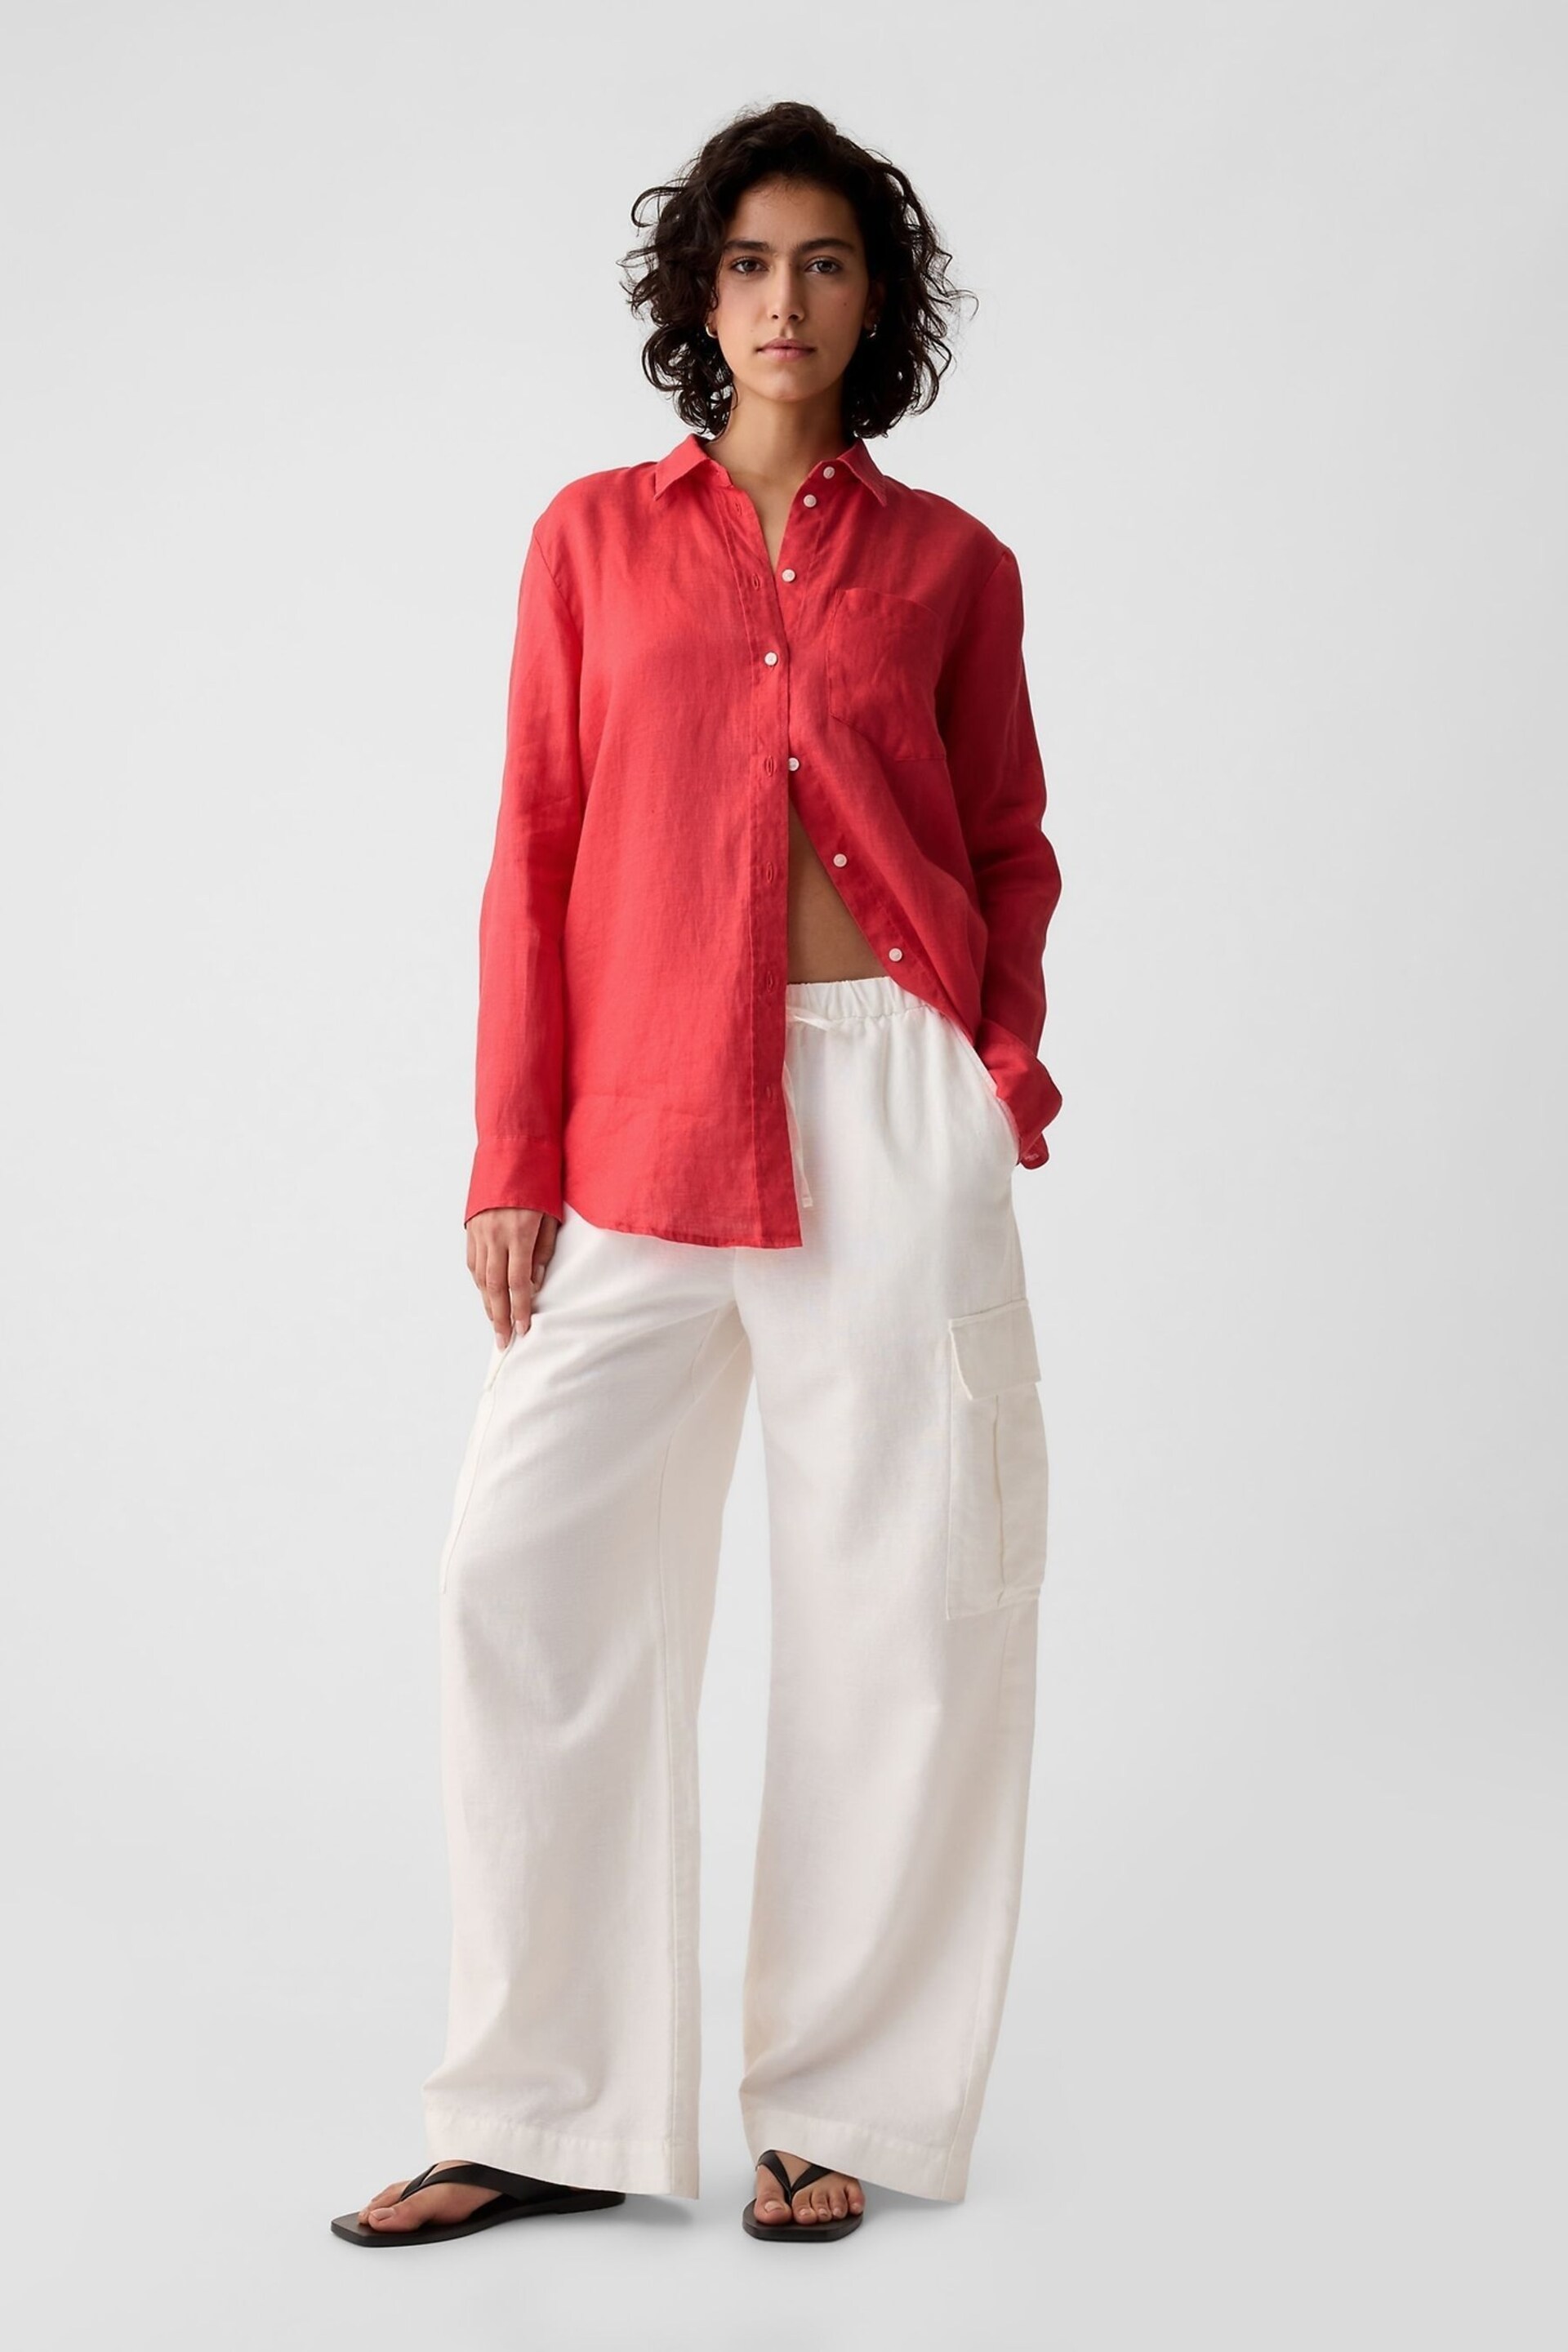 Gap Red 100% Linen Long Sleeve Oversized Shirt - Image 3 of 4